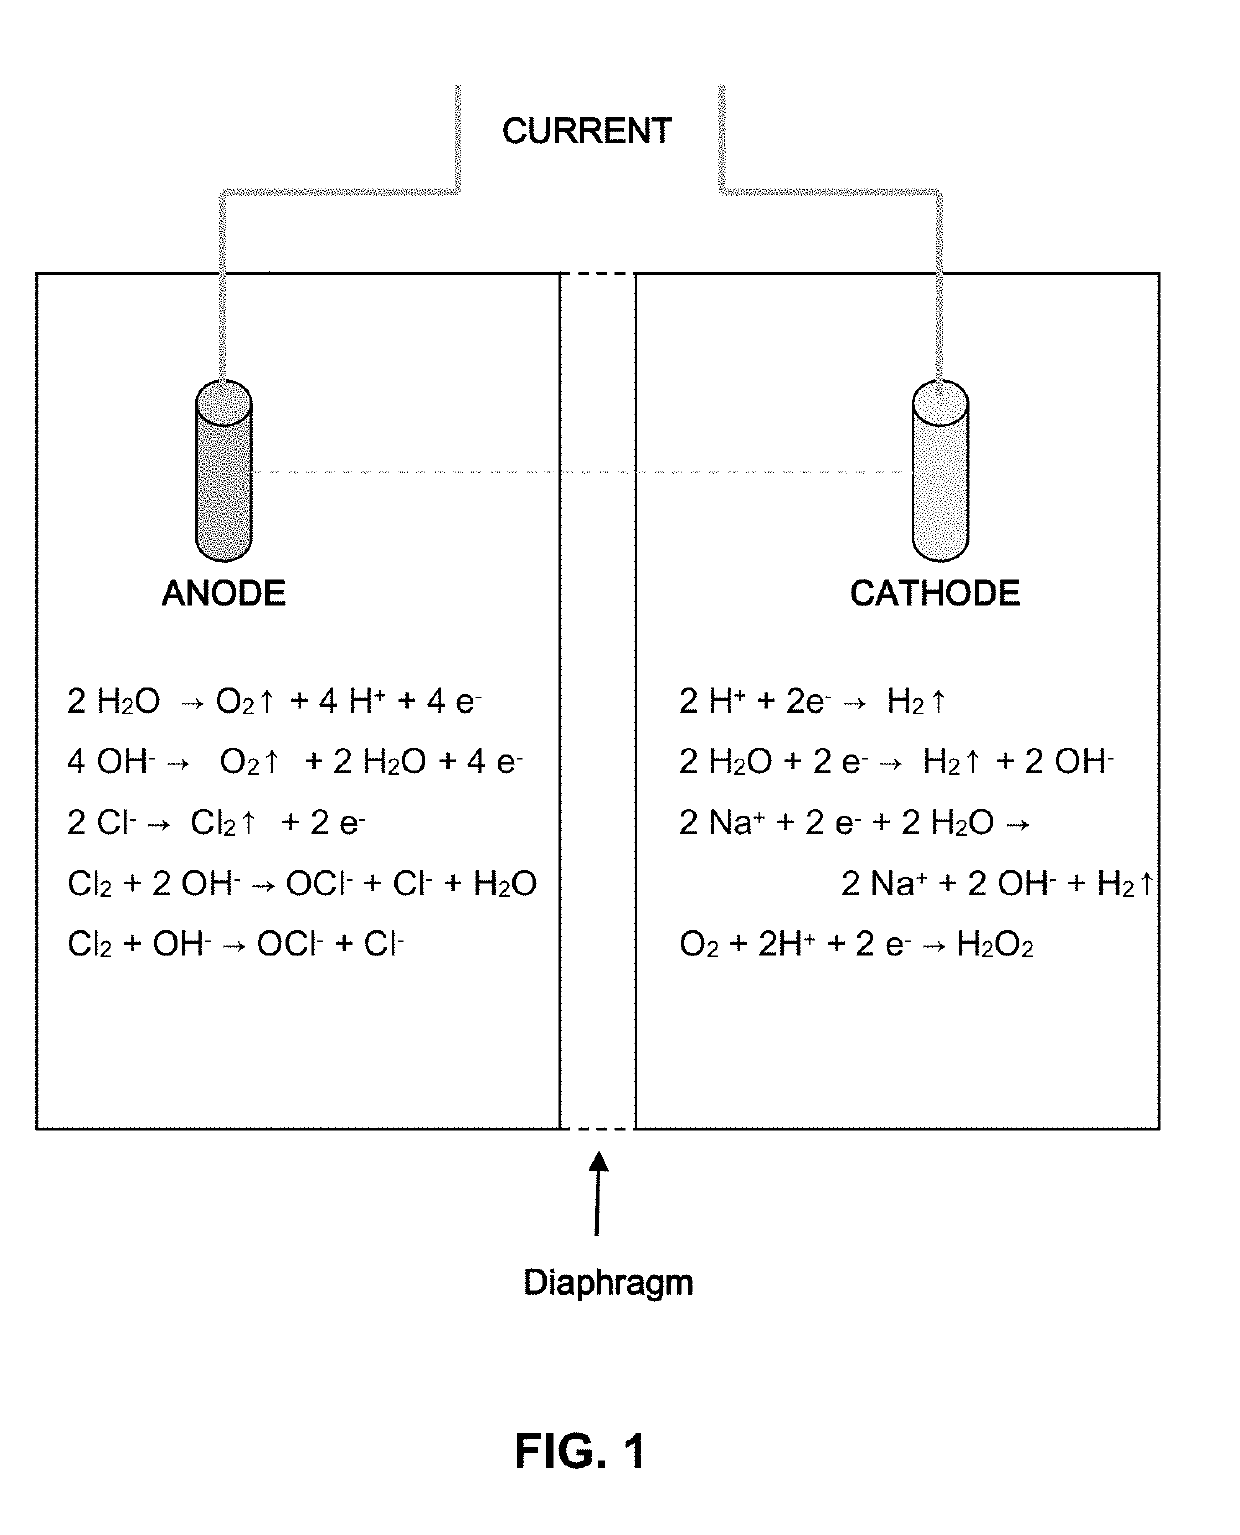 Materials reducing formation of hypochlorite